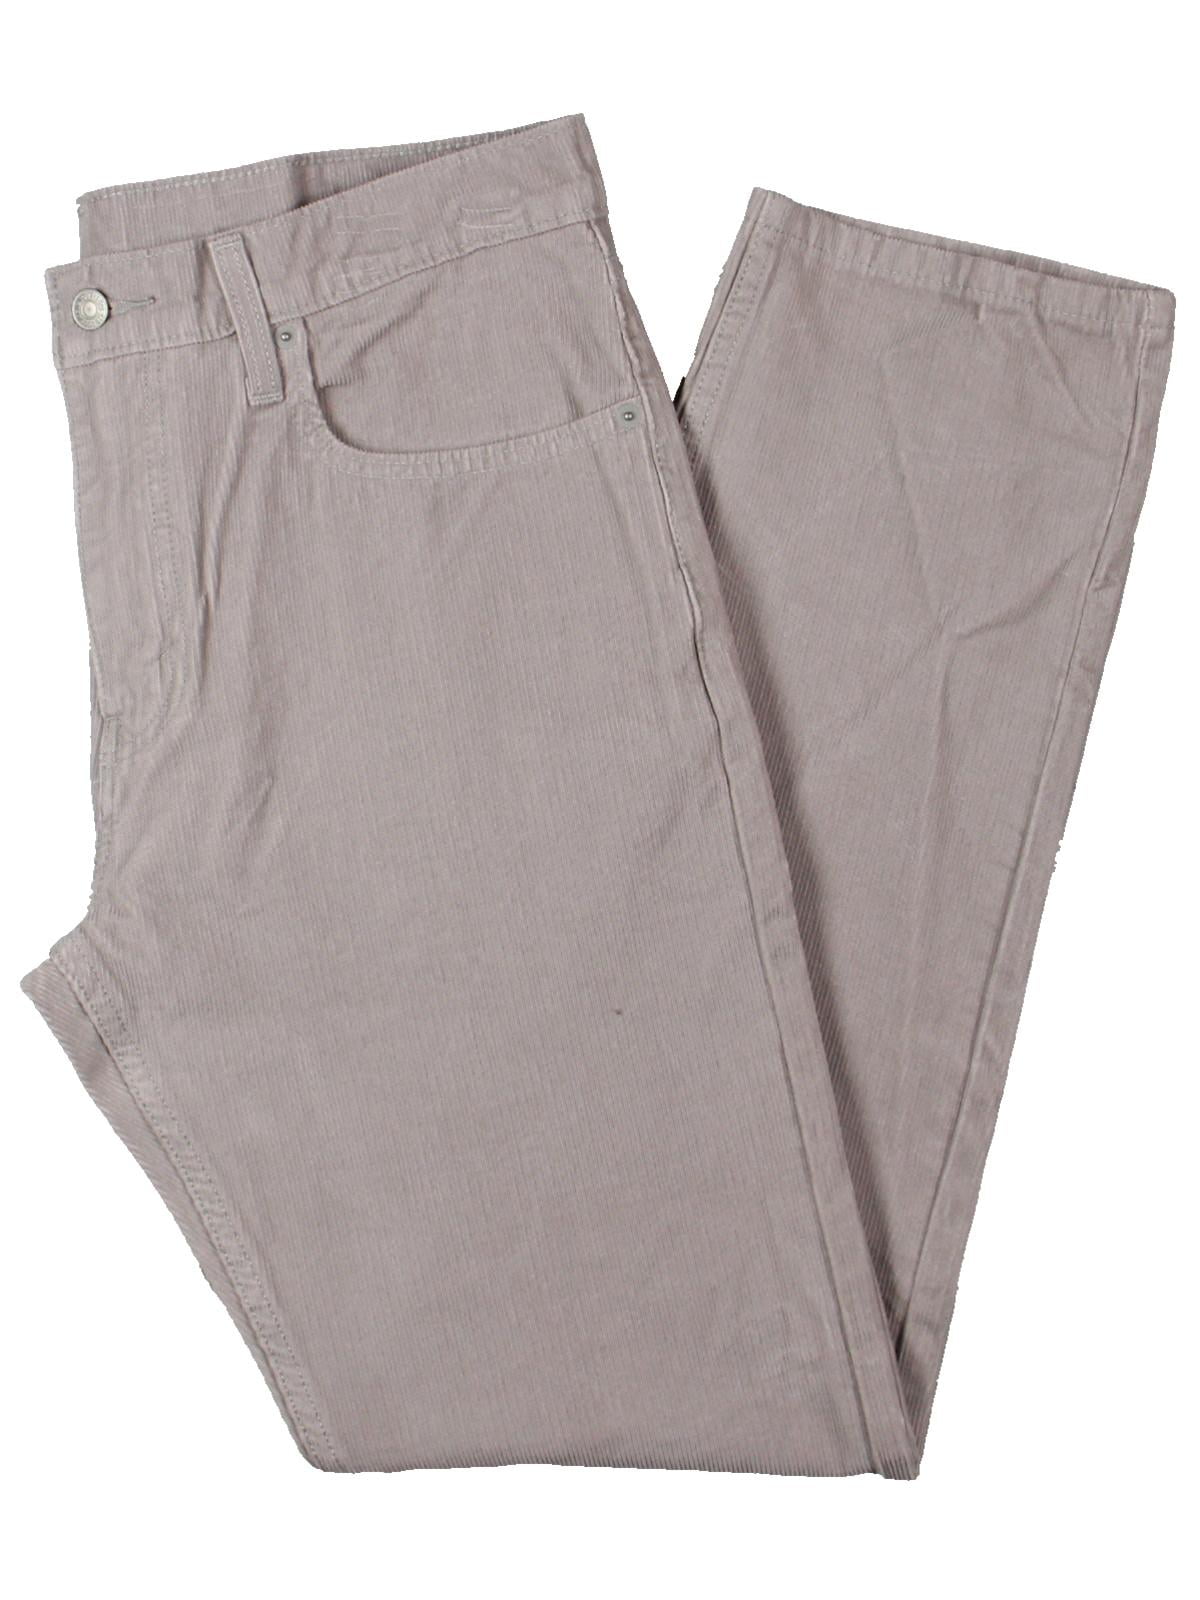 Levi Strauss & Co. Mens 502 Taper Regular Fit Stretch Corduroy Pants ...